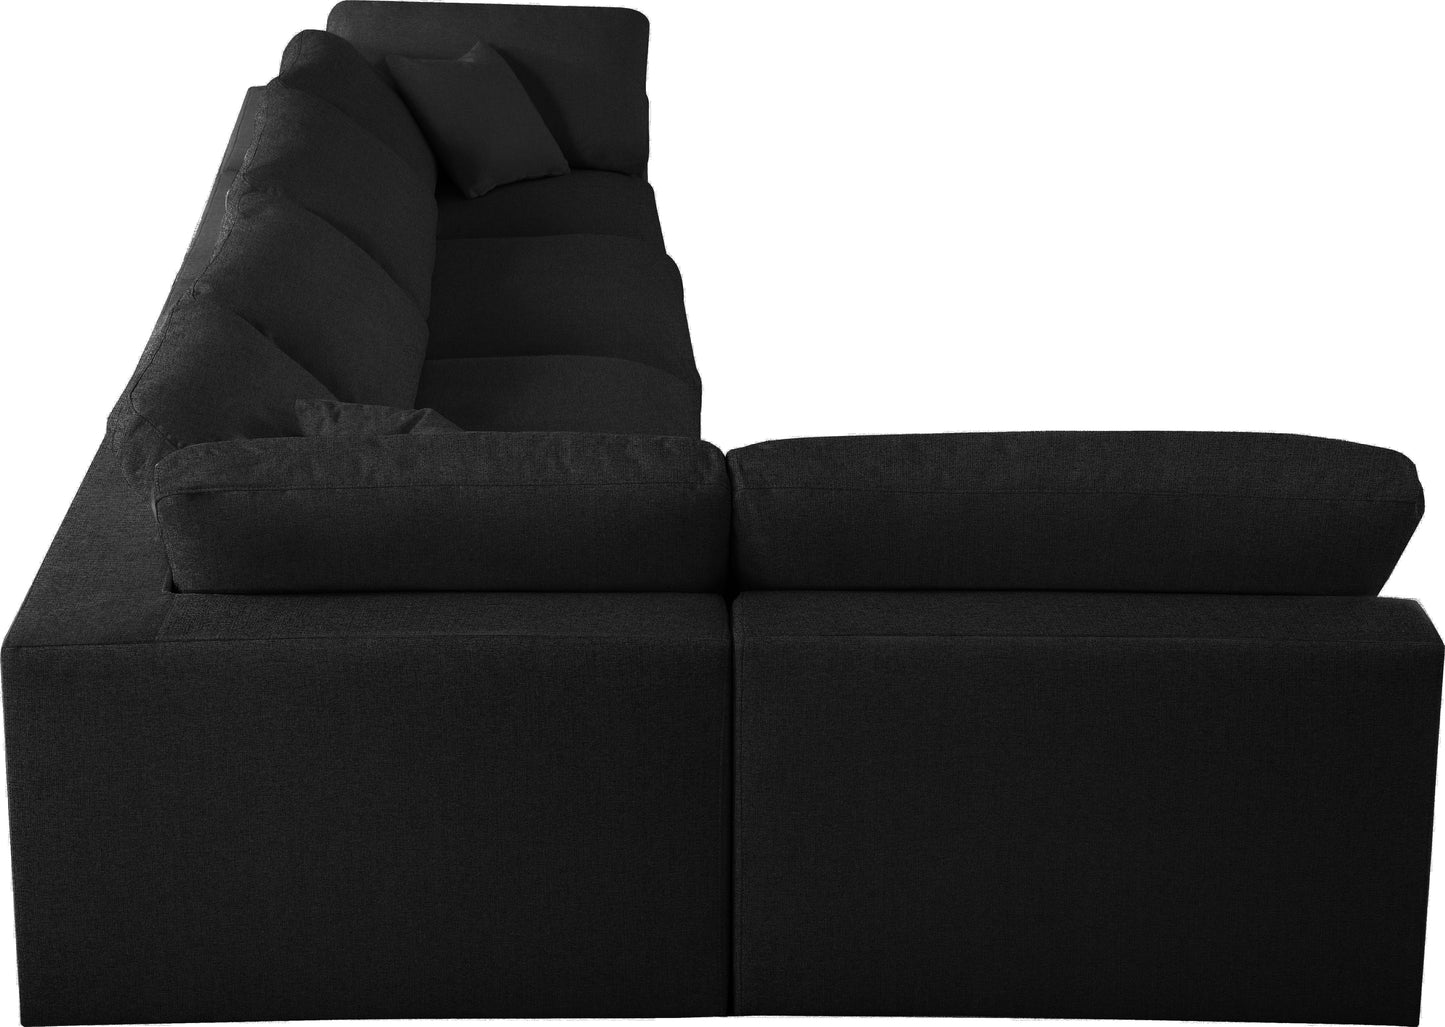 damian black linen textured fabric deluxe comfort modular sectional sec5d